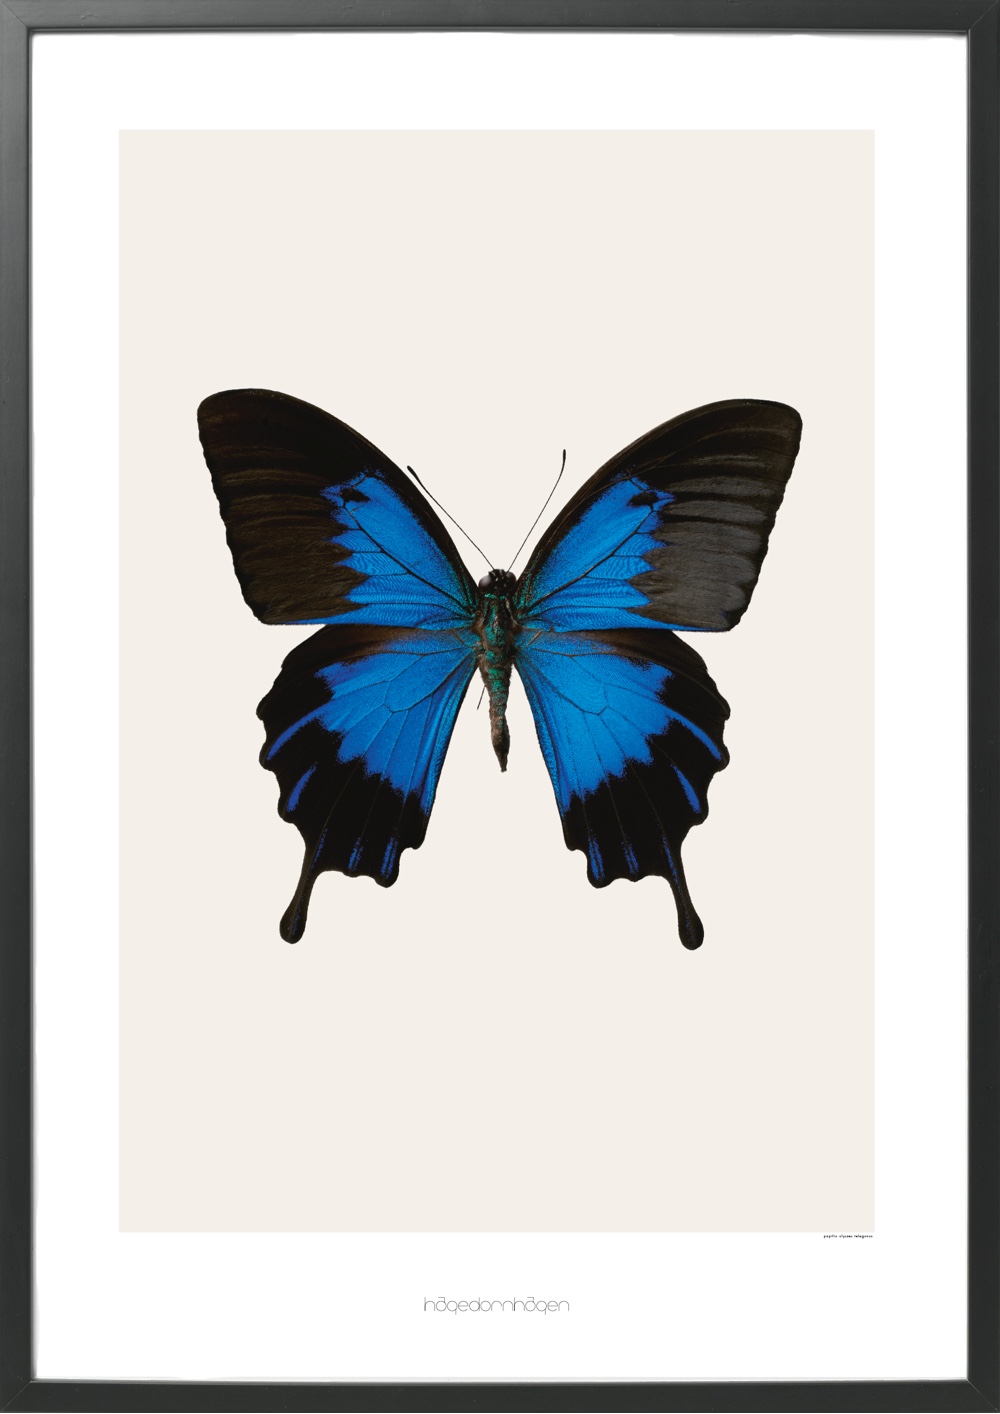 Papilio ulysses telegonus is from Hagedornhagen‘s classic collection.